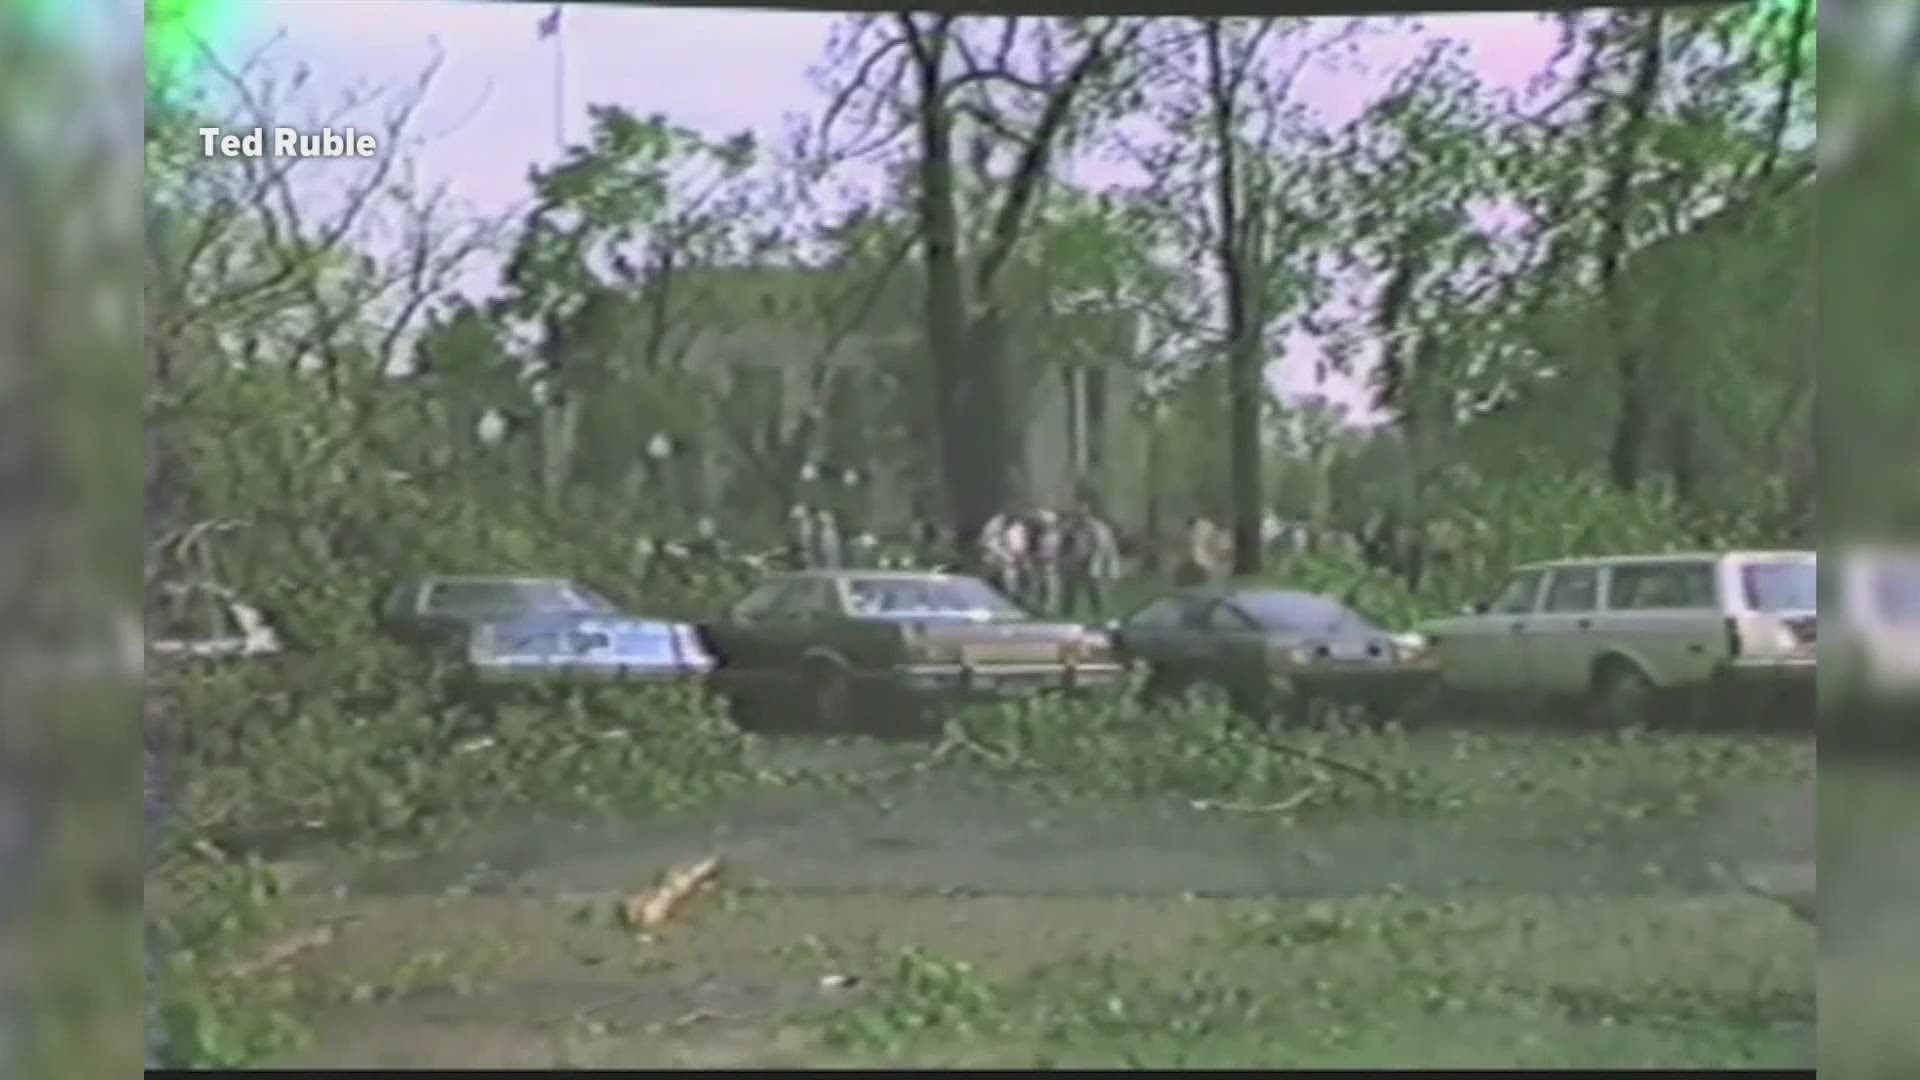 May 13, 1980 marks the 40th anniversary of the tornado that swept through Kalamazoo, killing 5 people.